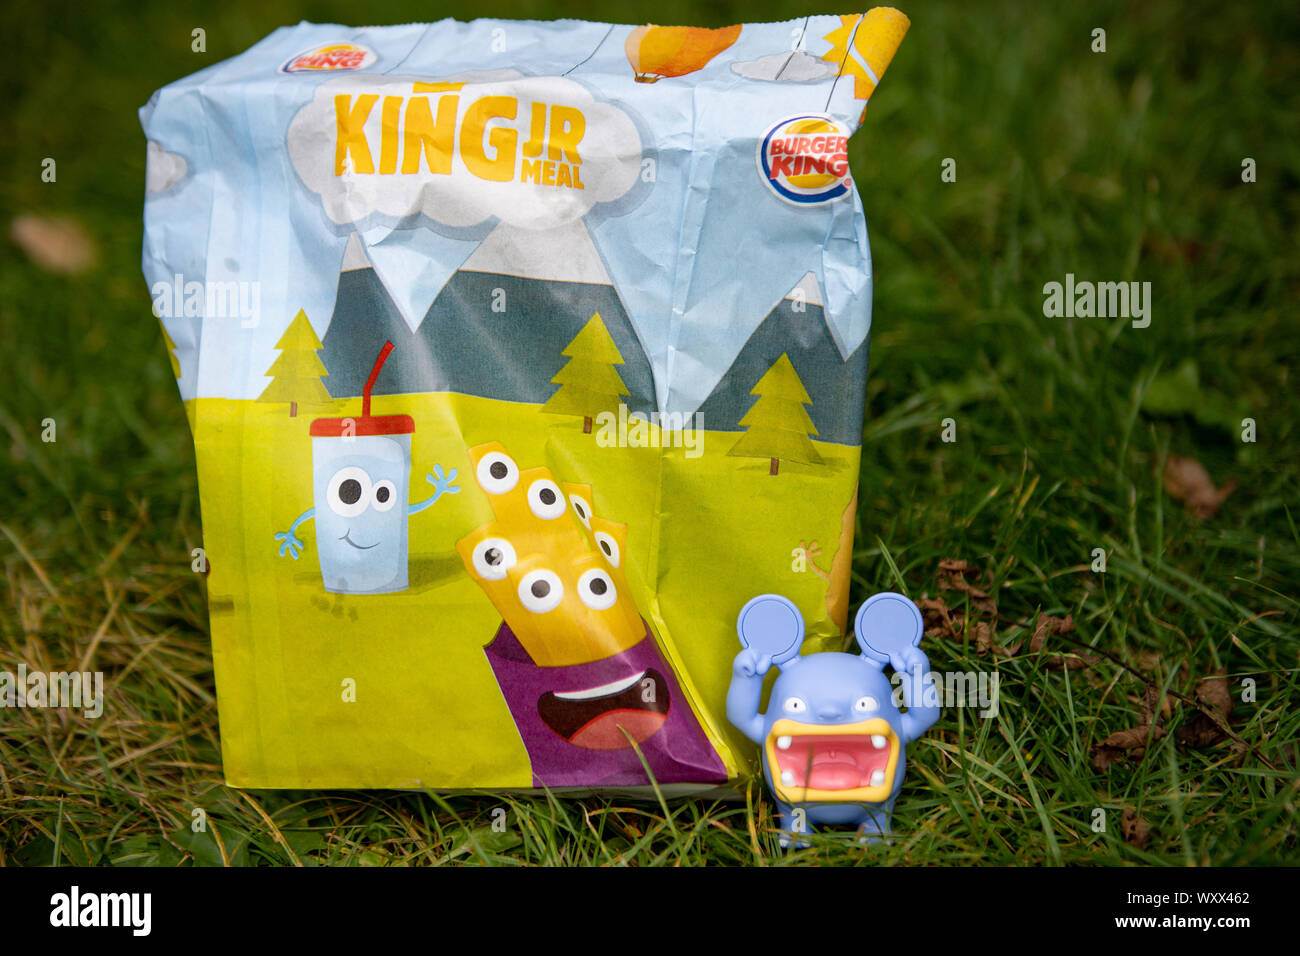 Juguetes de plástico burger king fotografías e imágenes de alta resolución  - Alamy